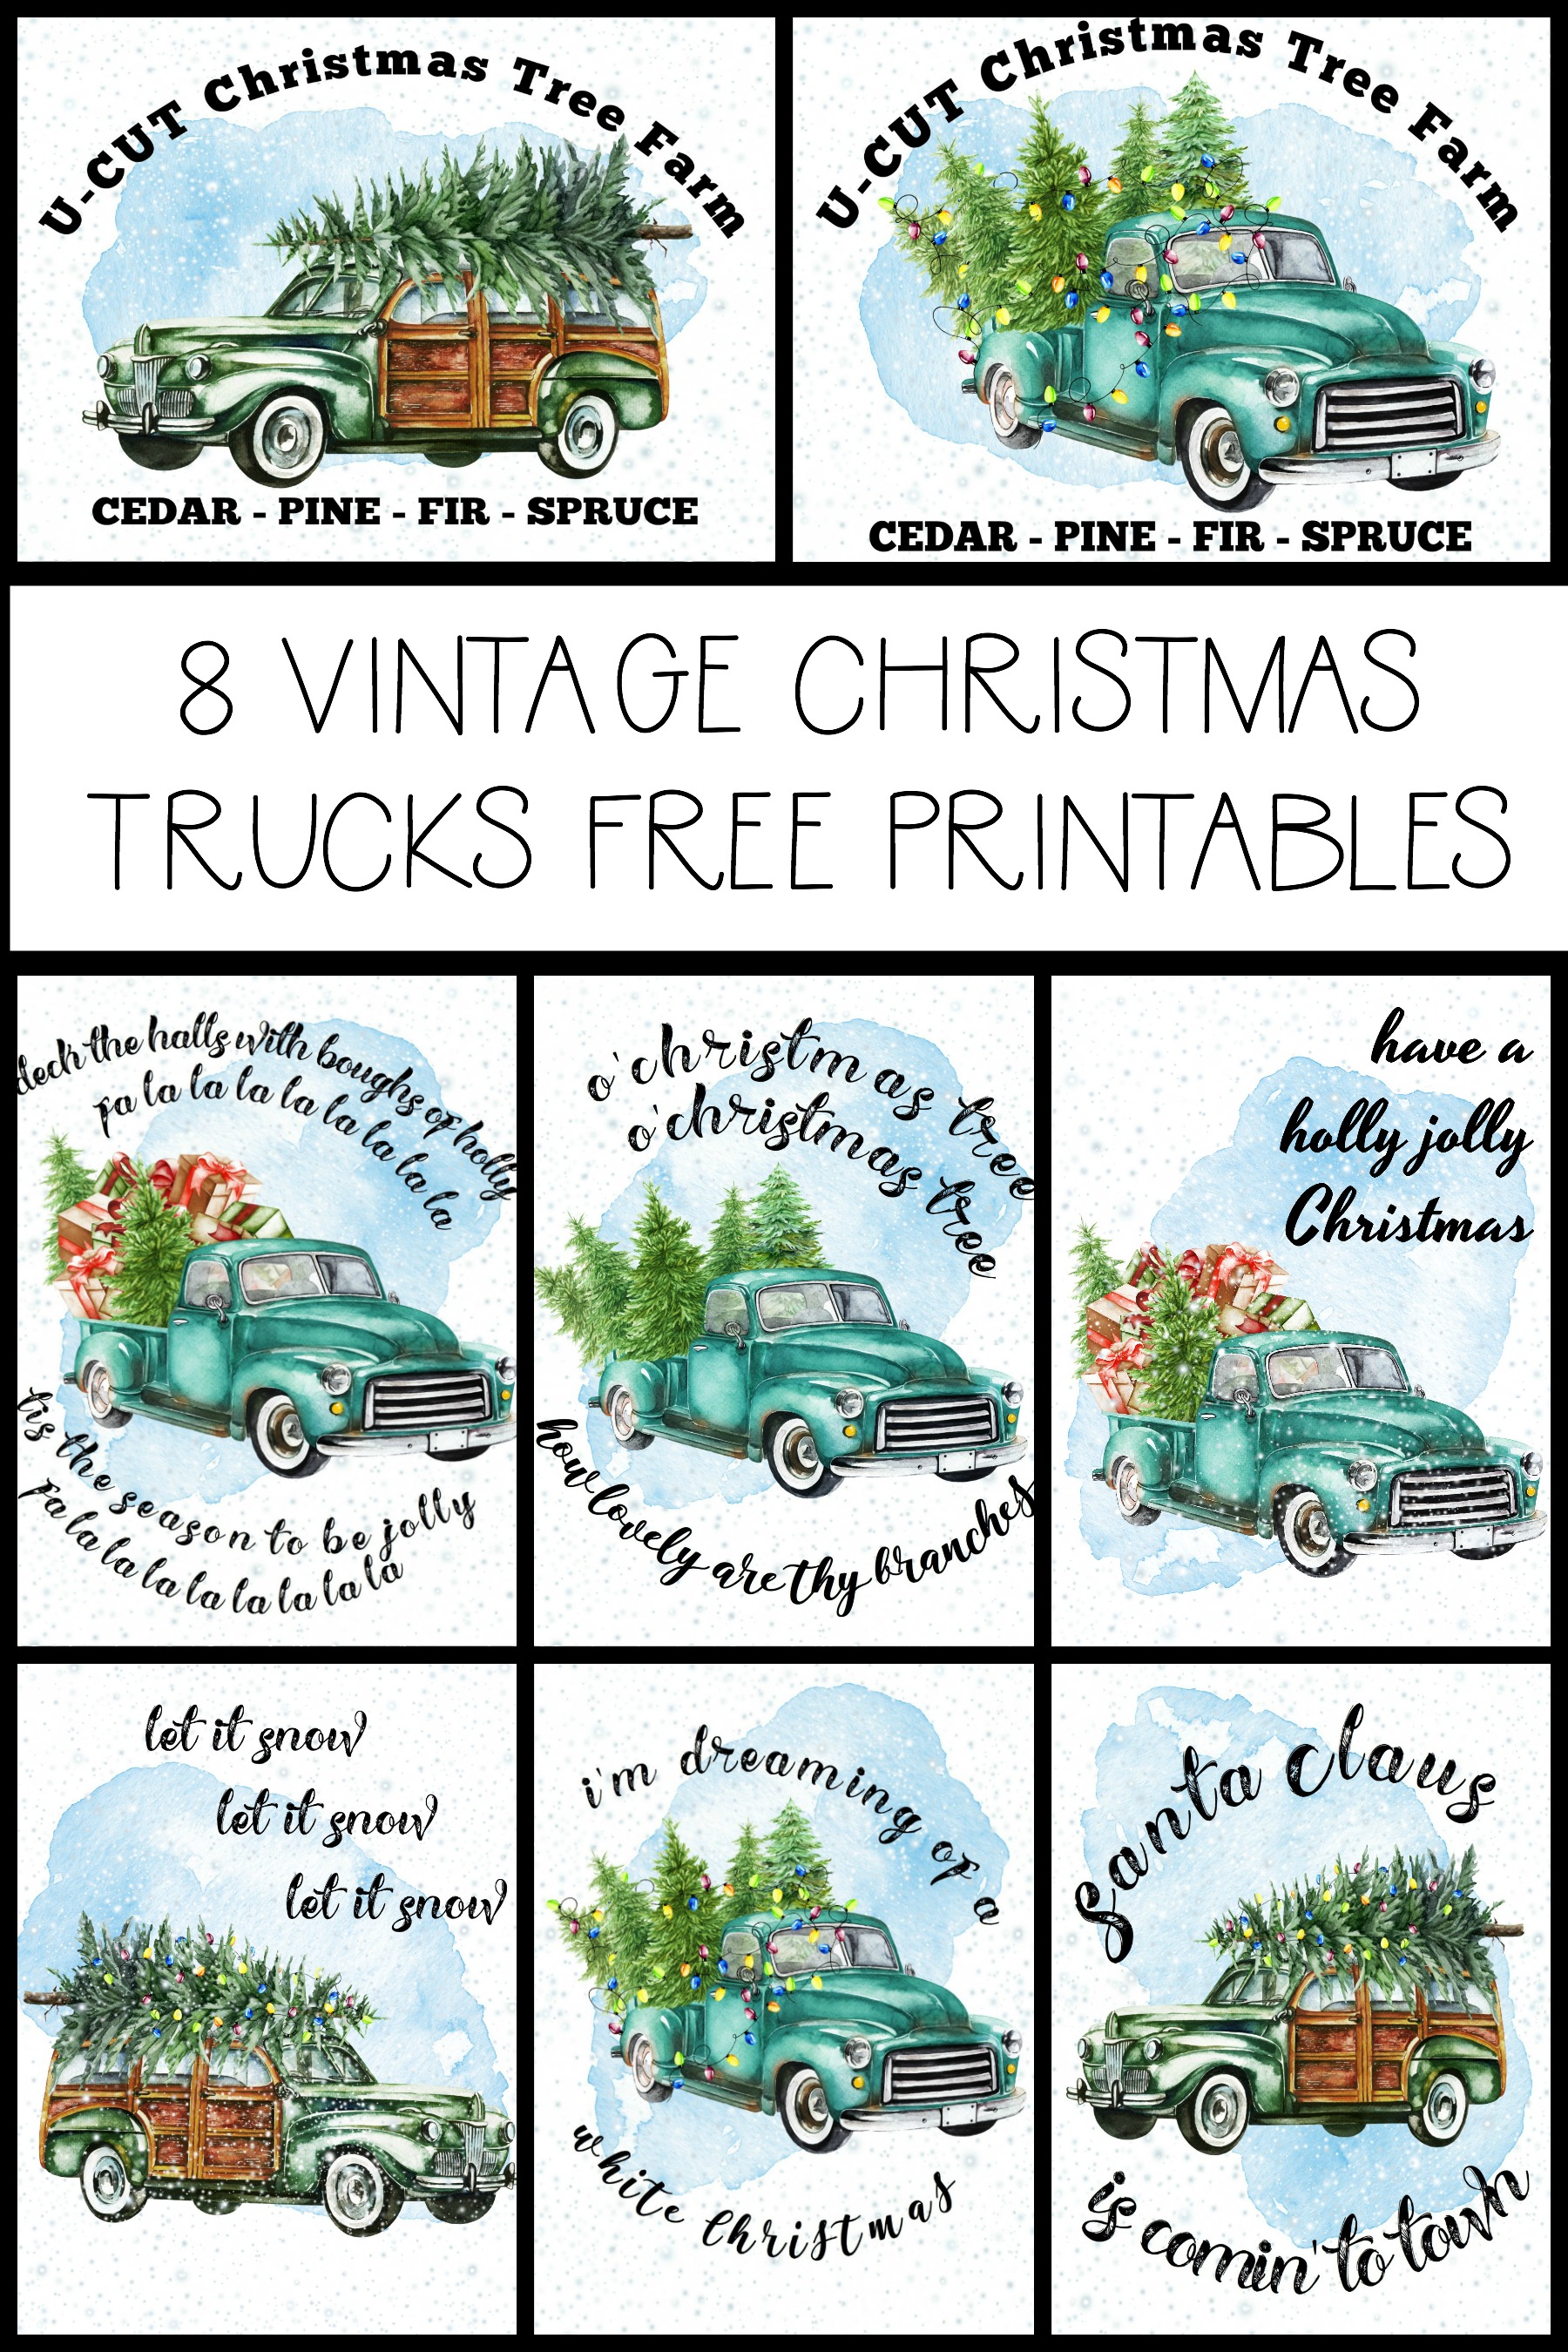 8 Vintage Christmas Trucks Free Printable.